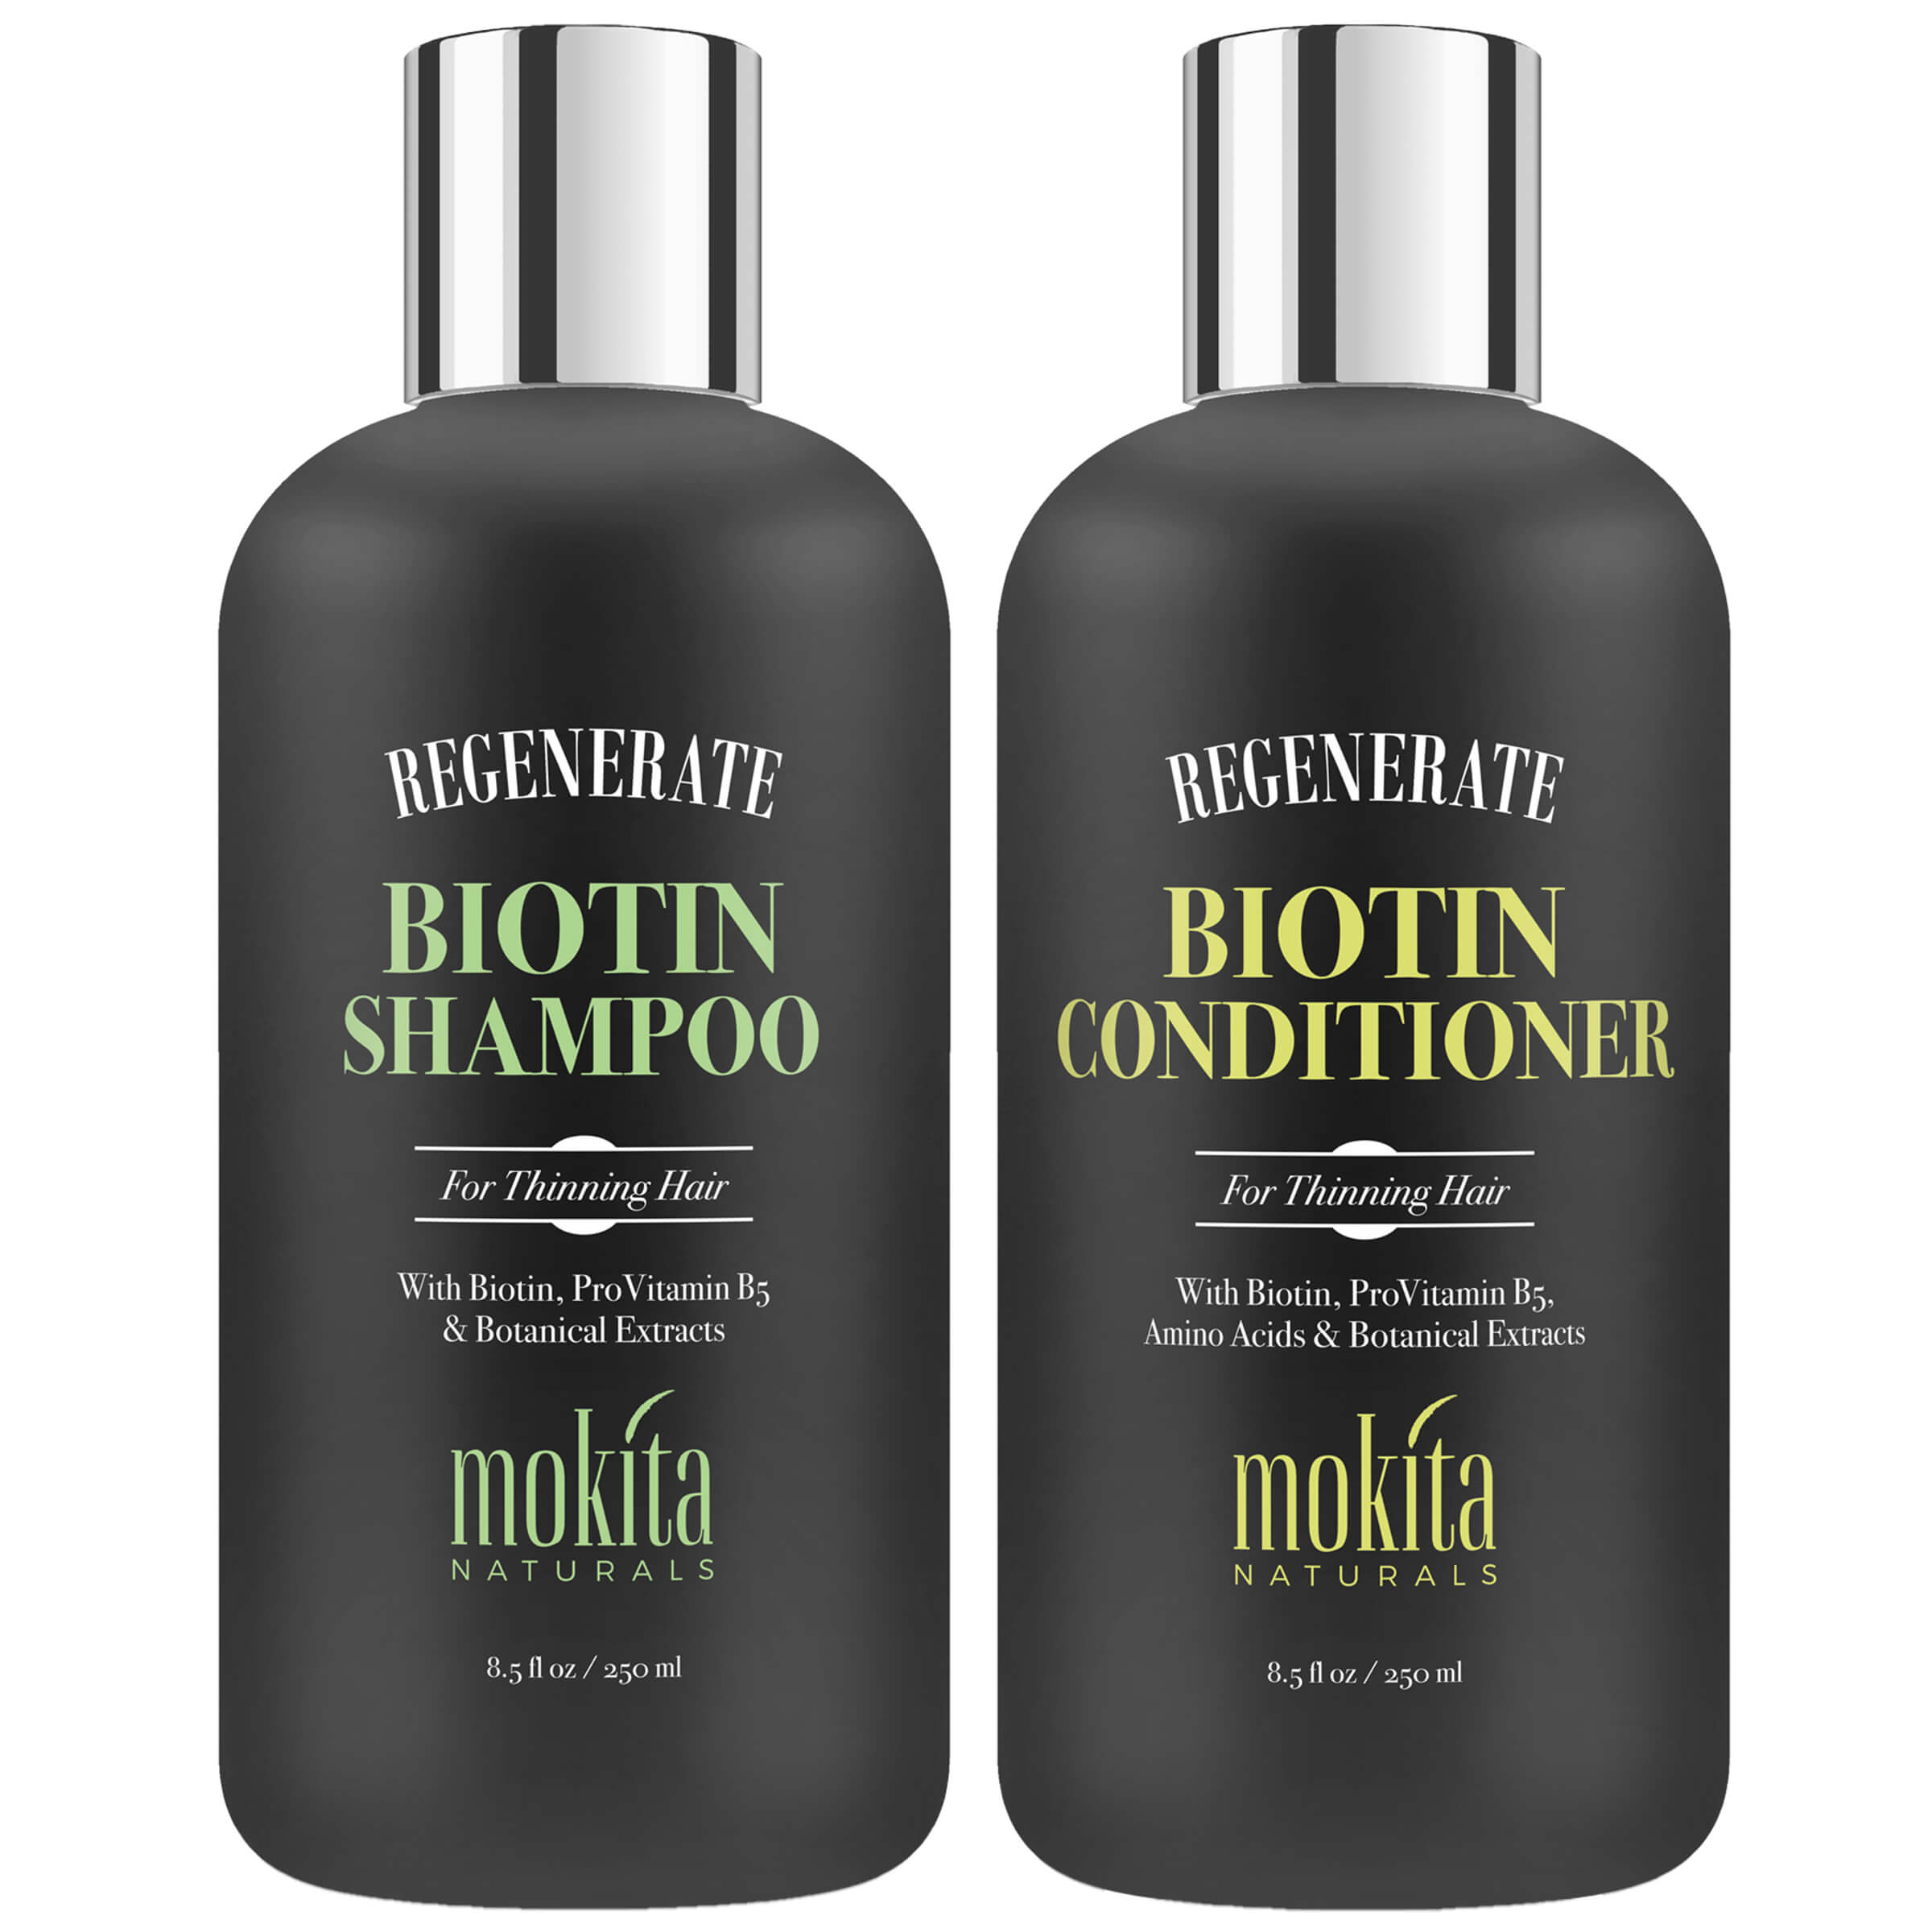 Regerate Biotin Shampoo & Conditioner